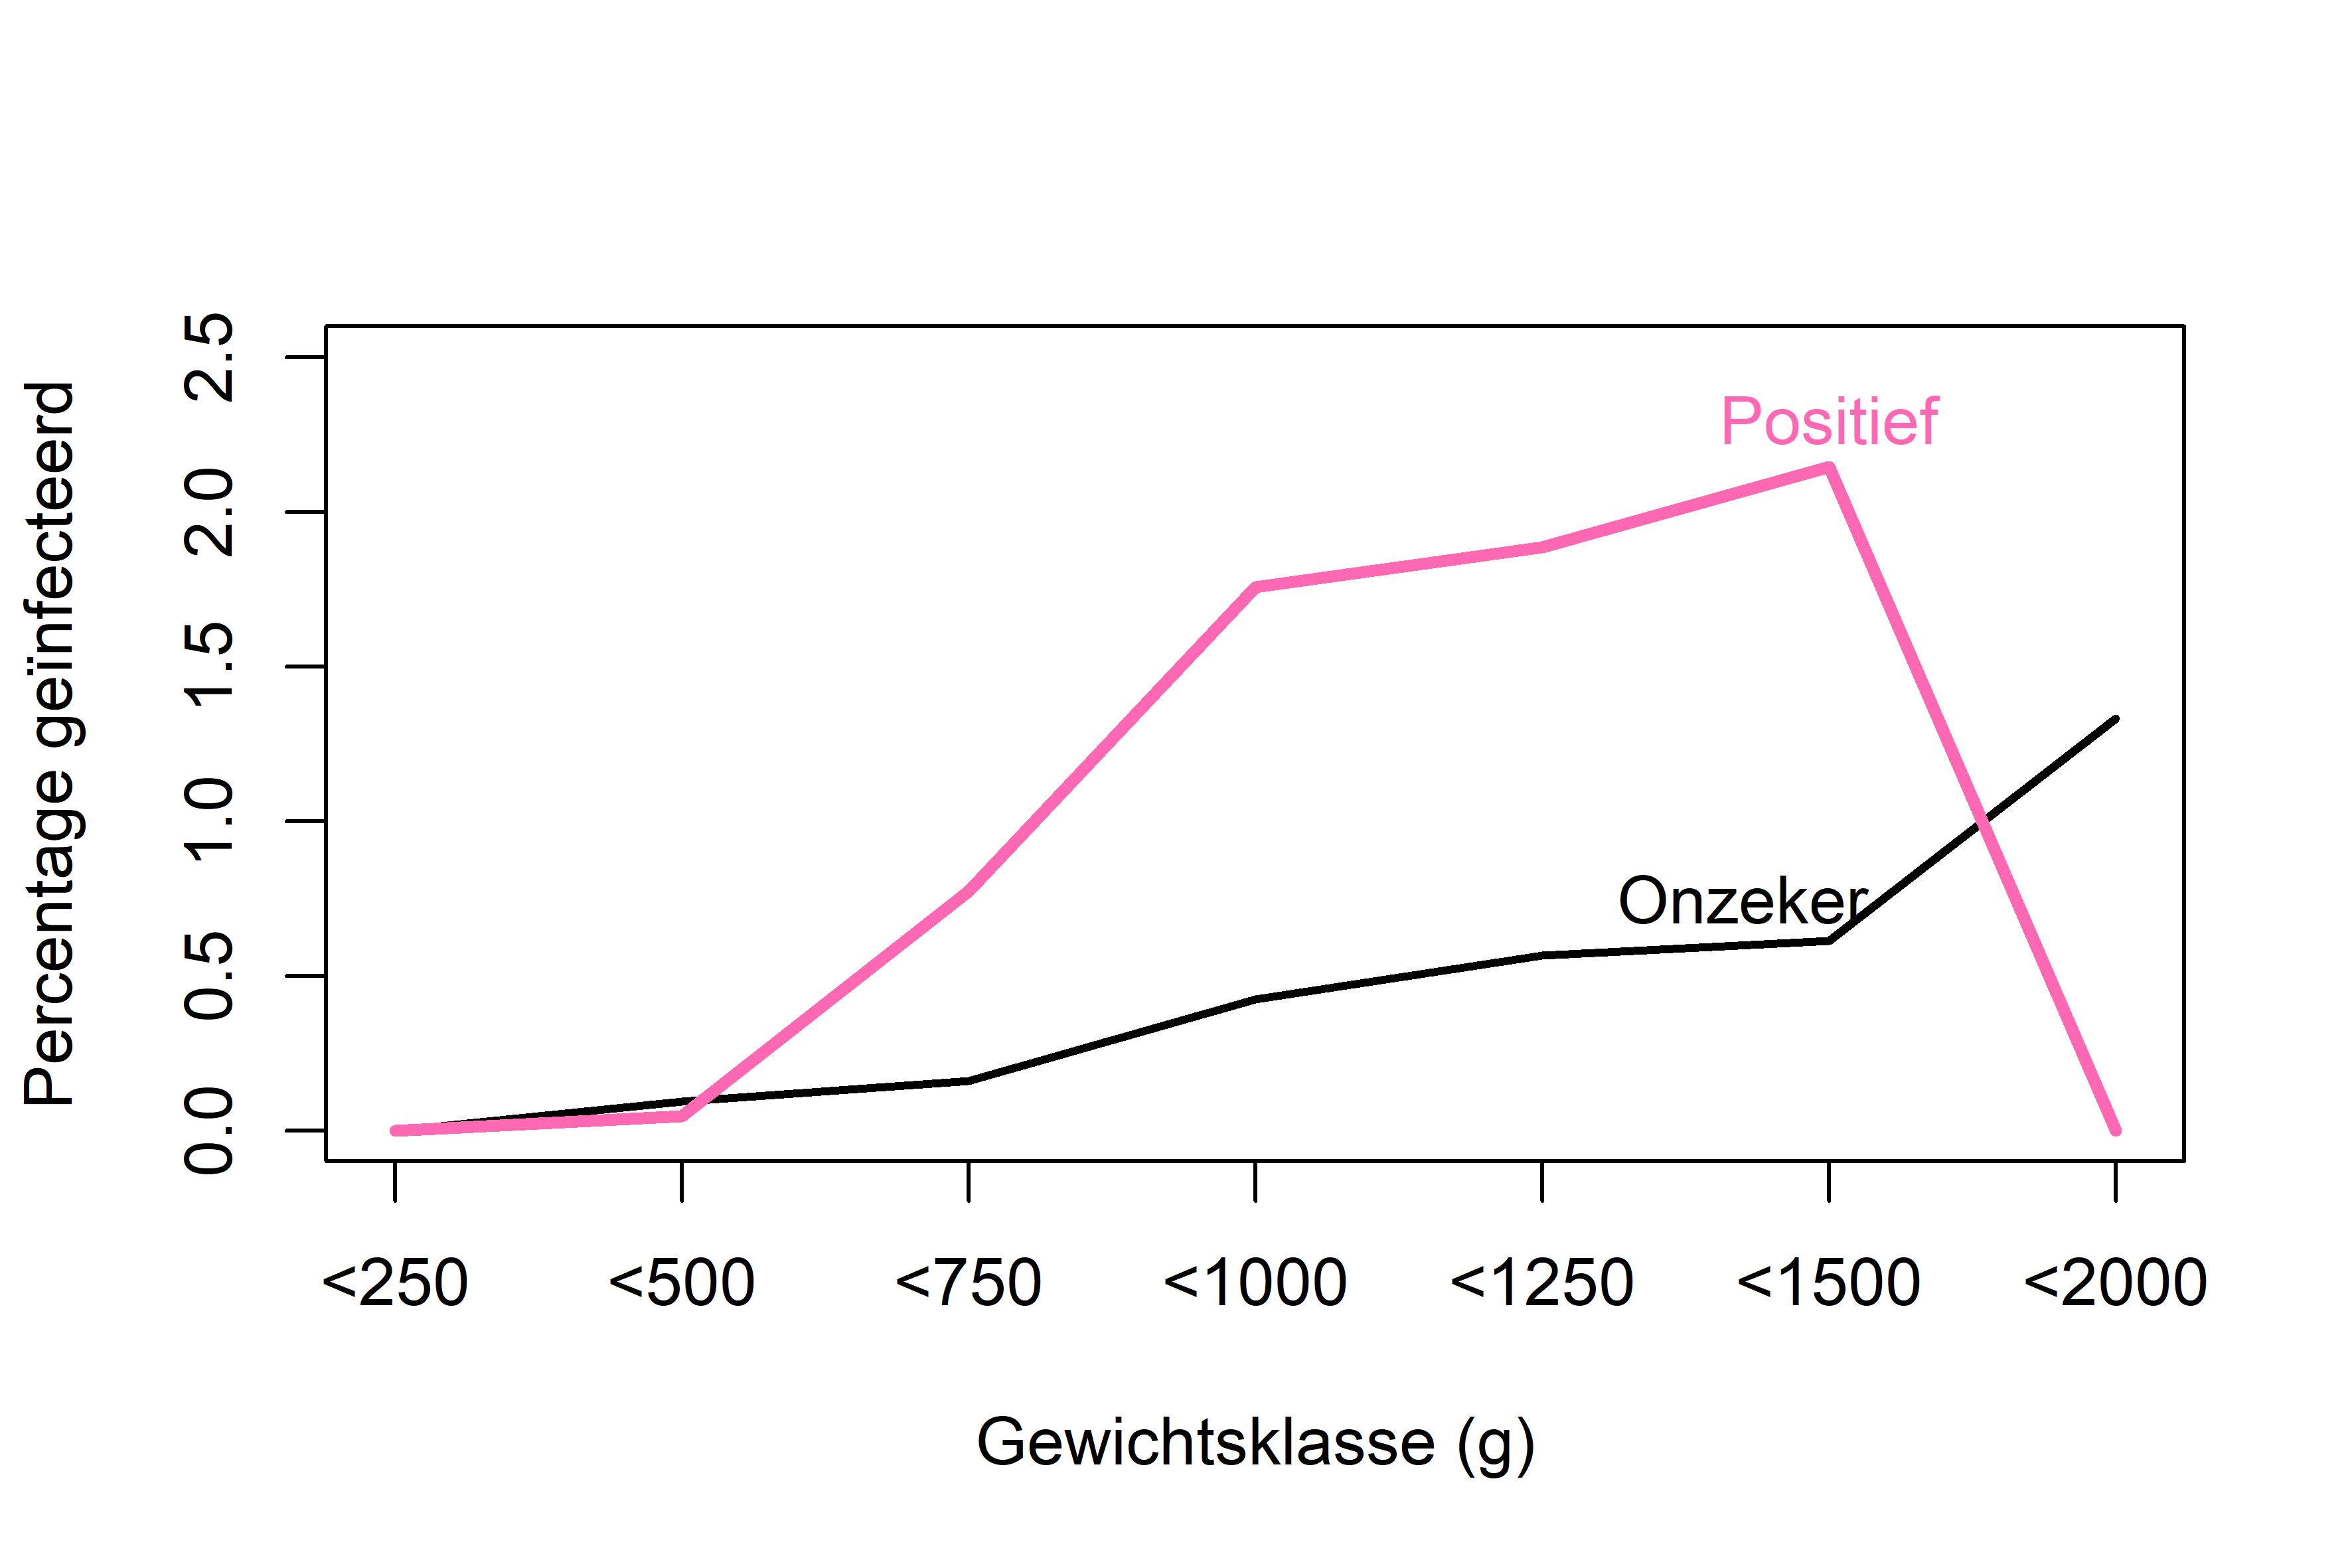 Percentage geïnfecteerde (roze) en onzekere (zwart) muskusratten per gewichtsklasse (g).